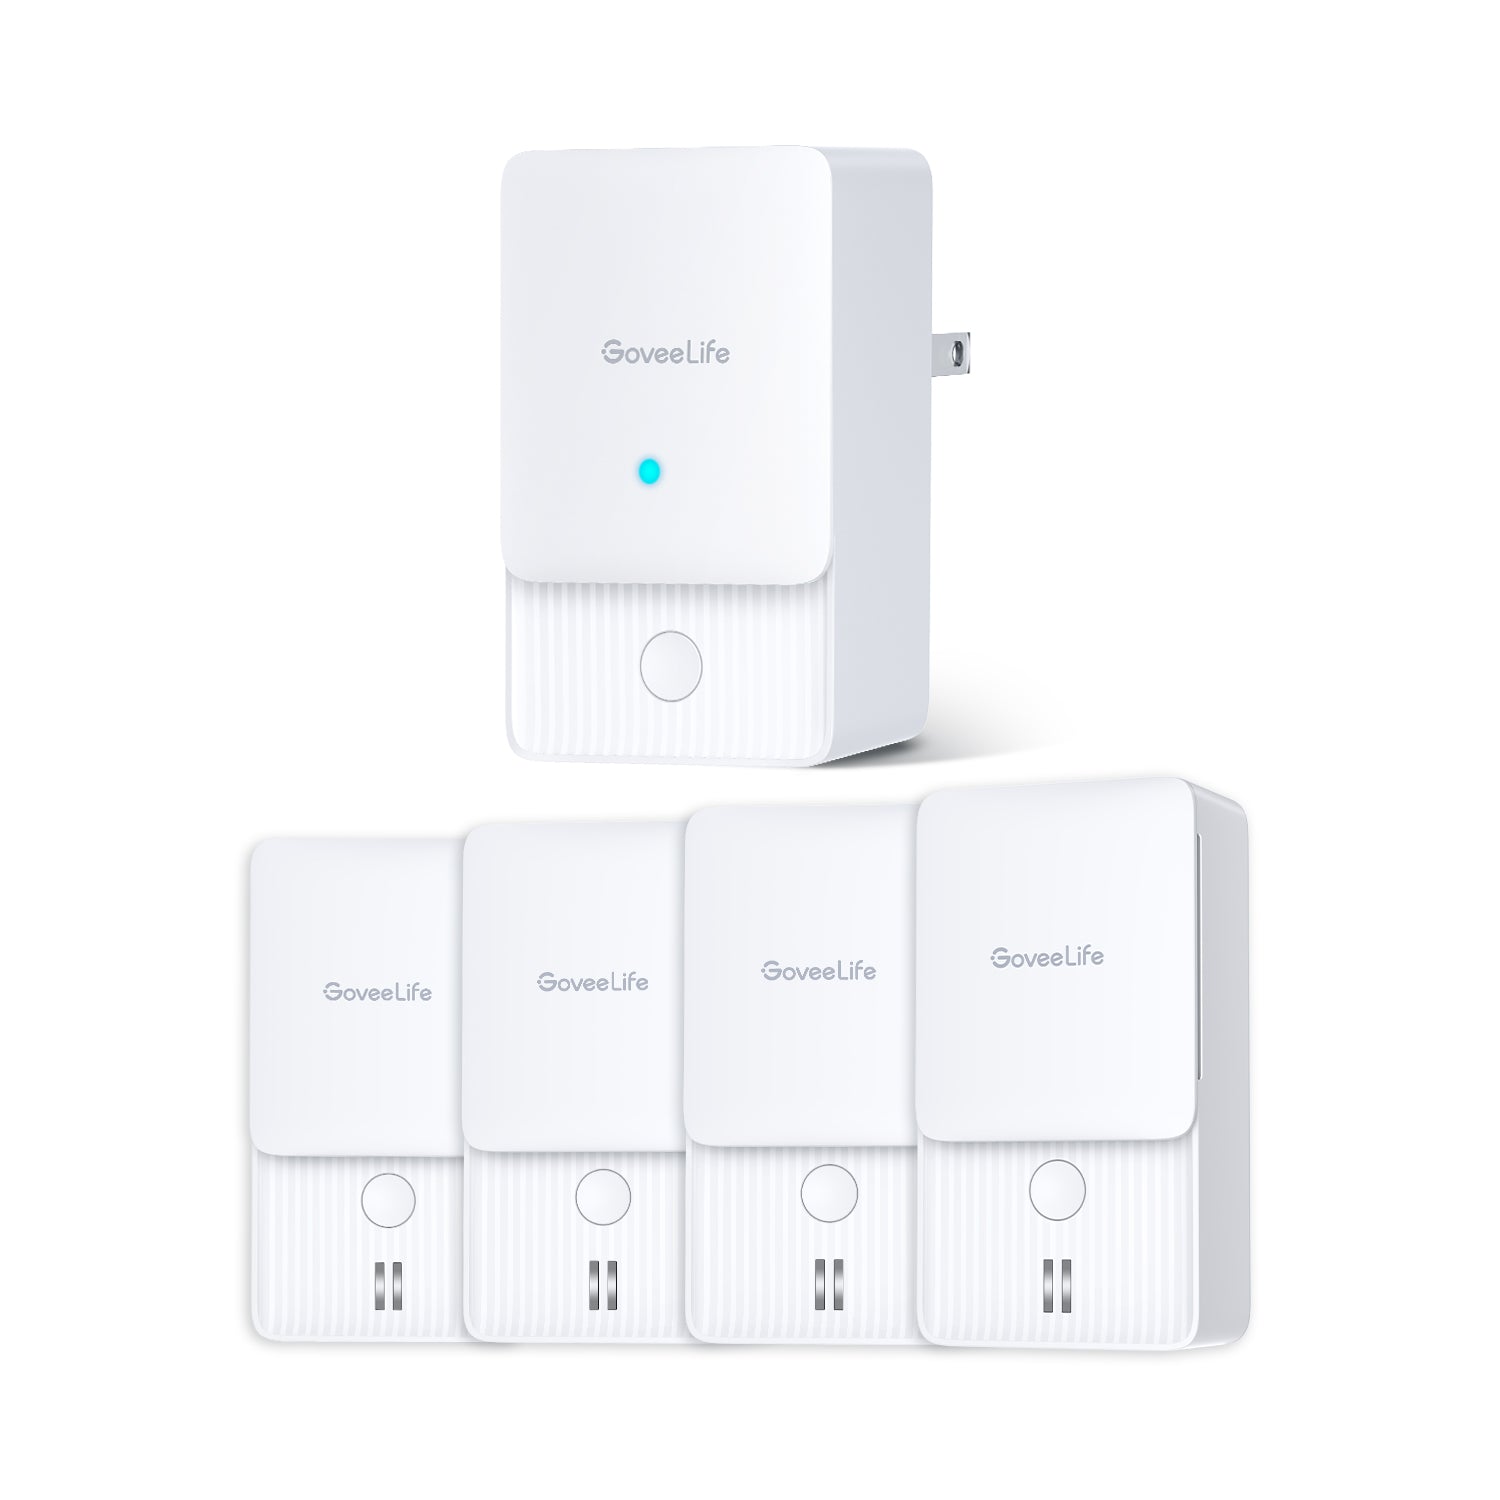 GoveeLife Water Leak Detector, WiFi gateway + Sensors, 64.99$, 50% off